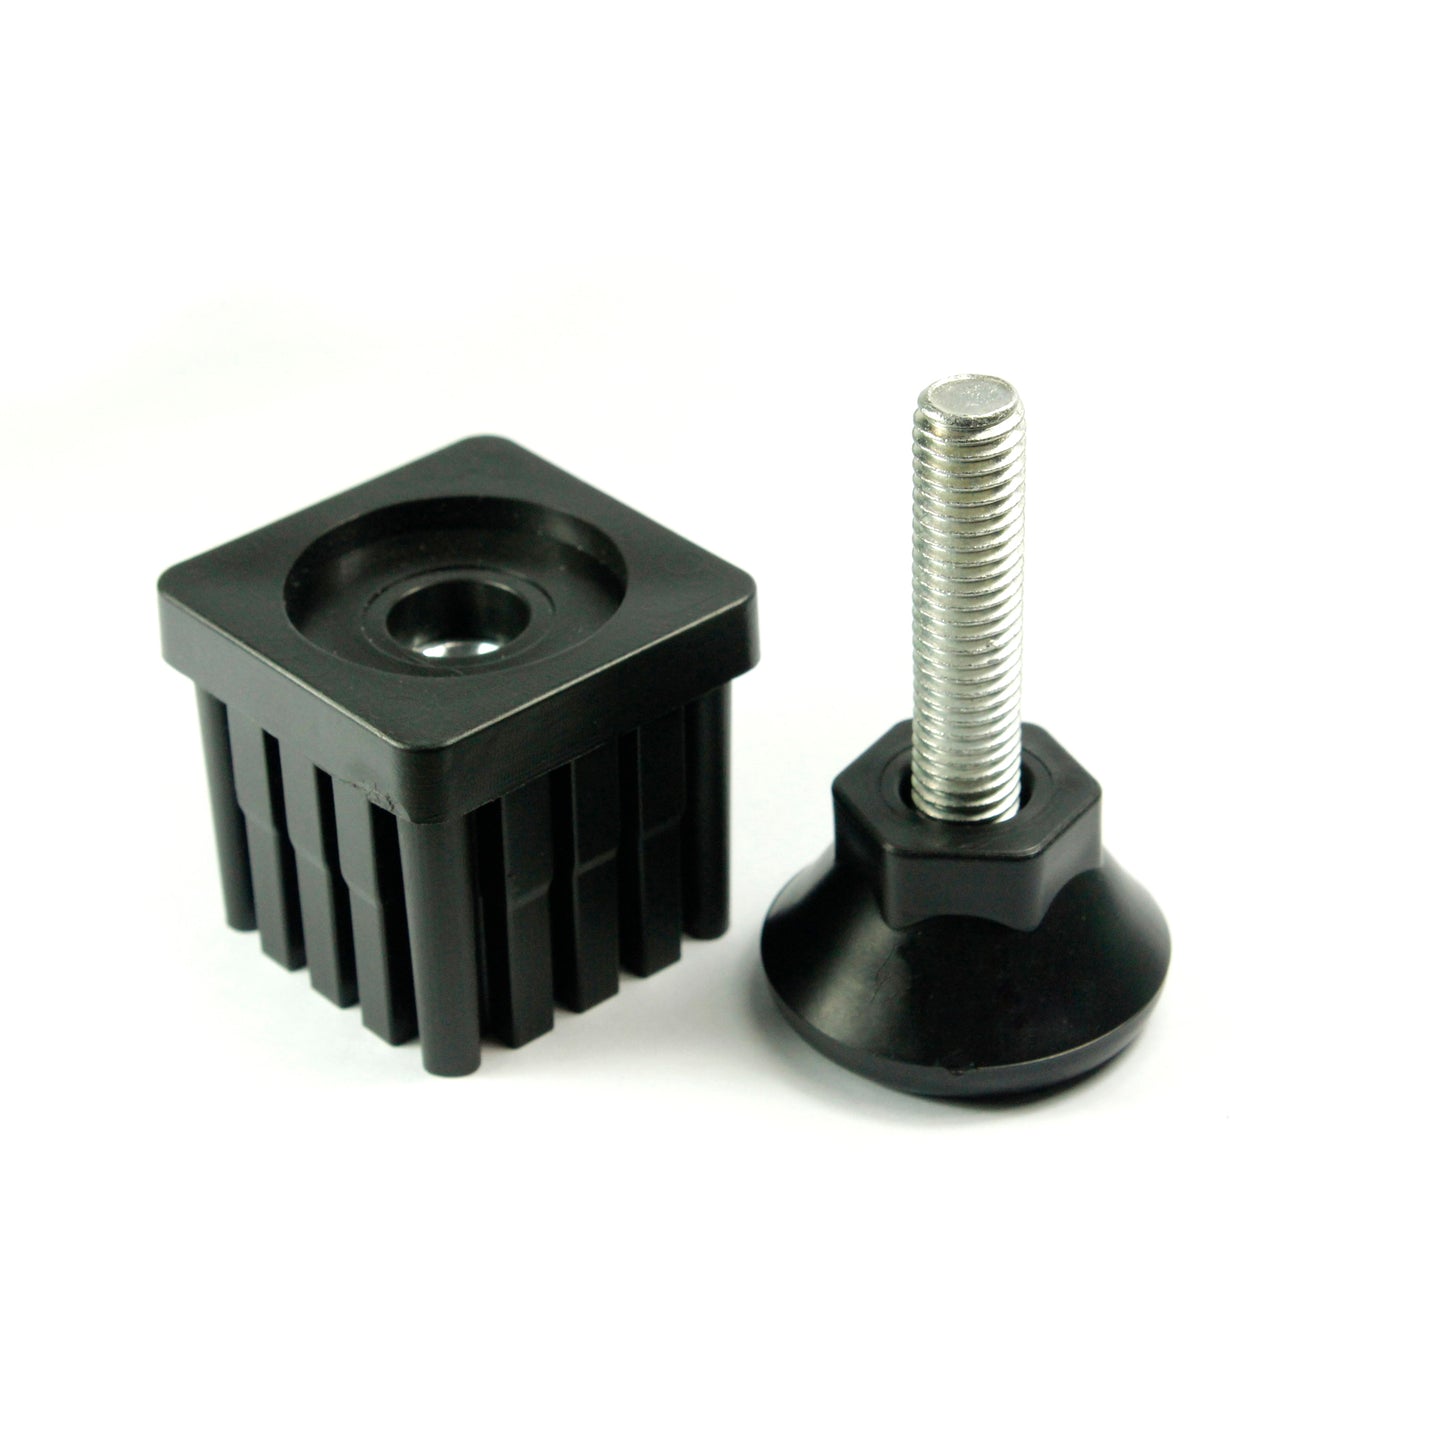 MODEL MT-309-C size 50*50mm Threaded insert Plug for square tube